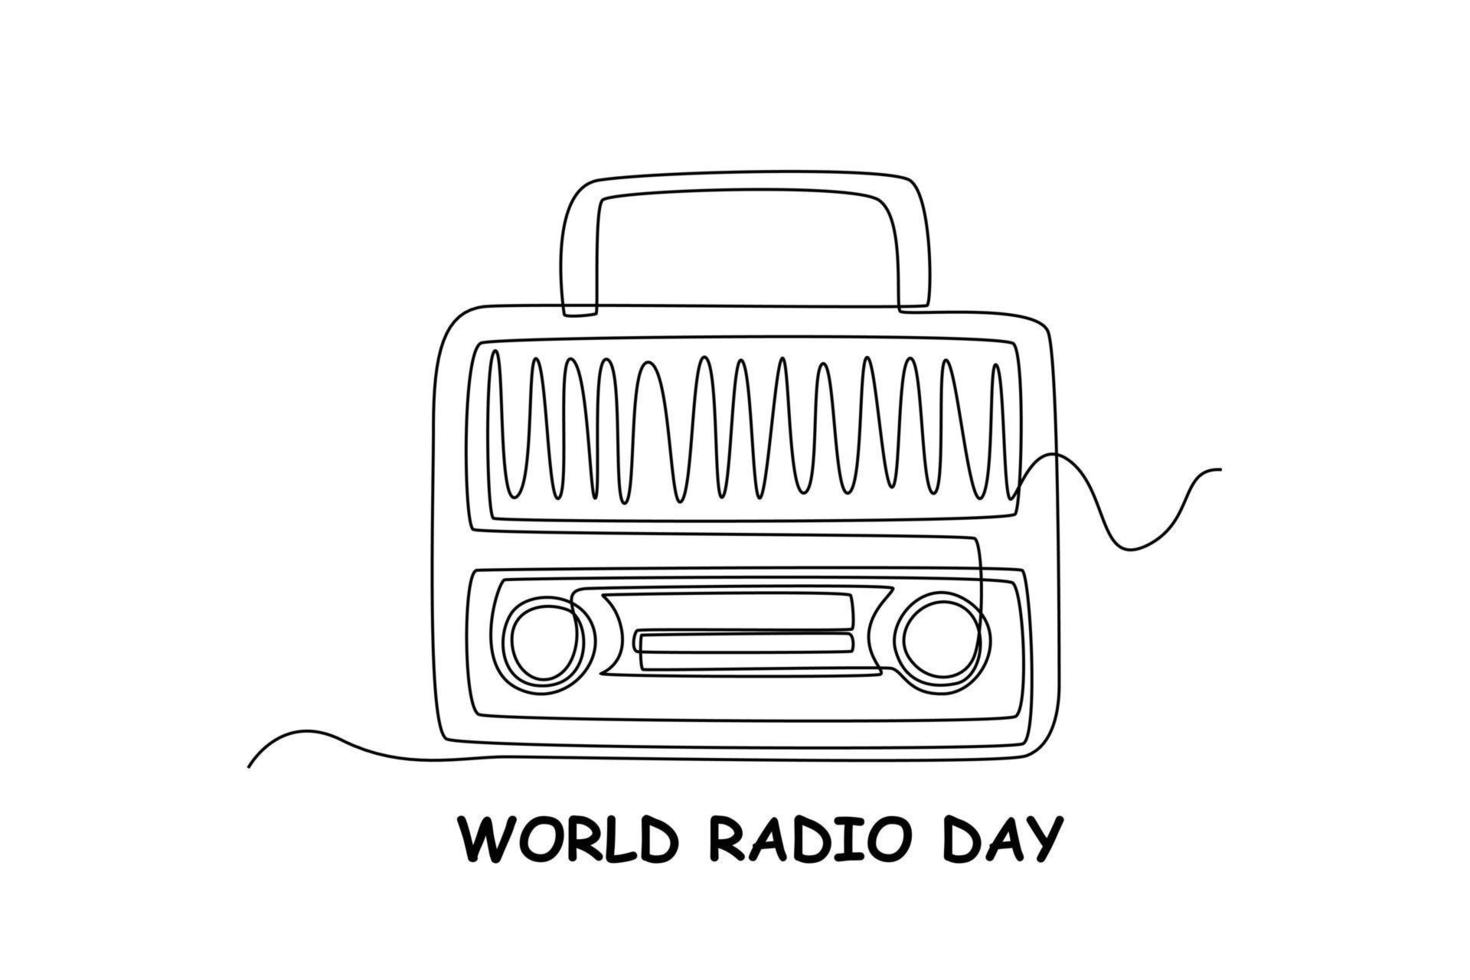 Single one line drawing retro style radio. World radio day concept. Continuous line draw design graphic vector illustration.